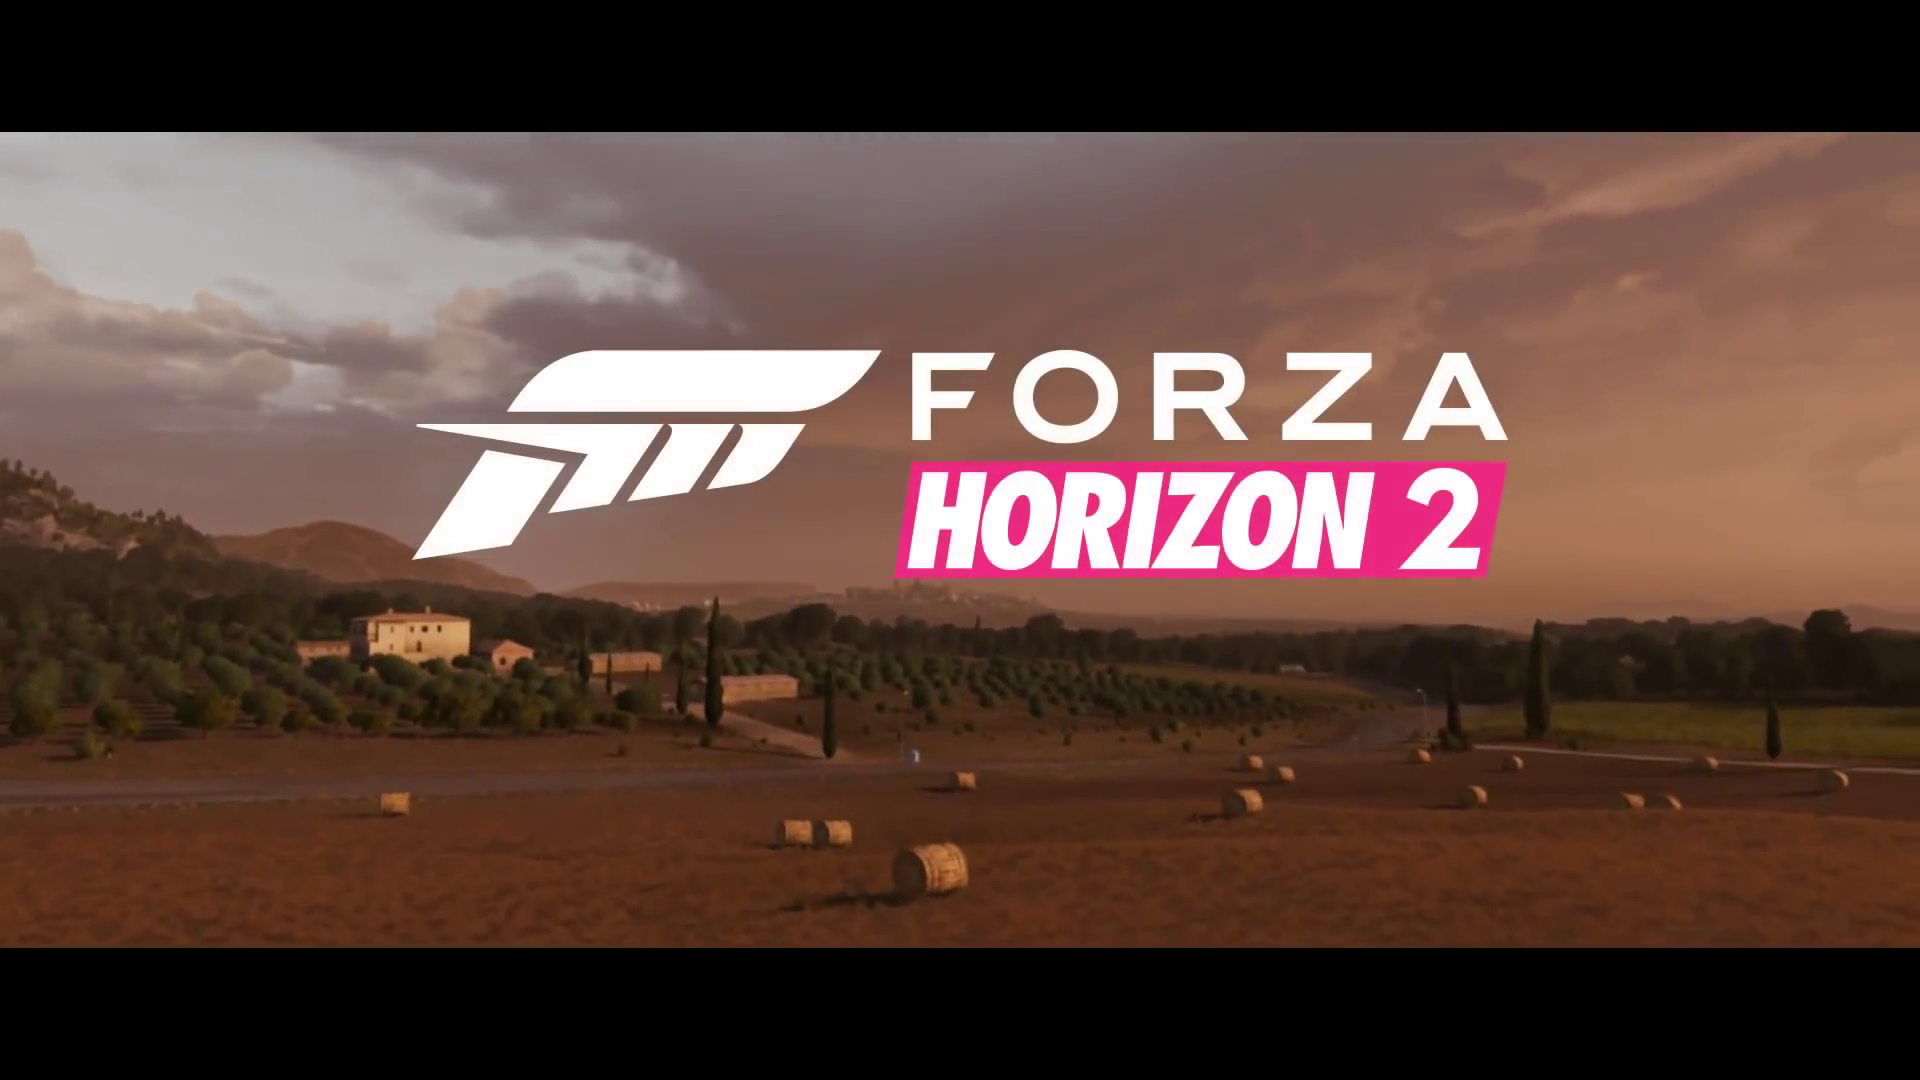 Horizon Forza Video Wallpaper